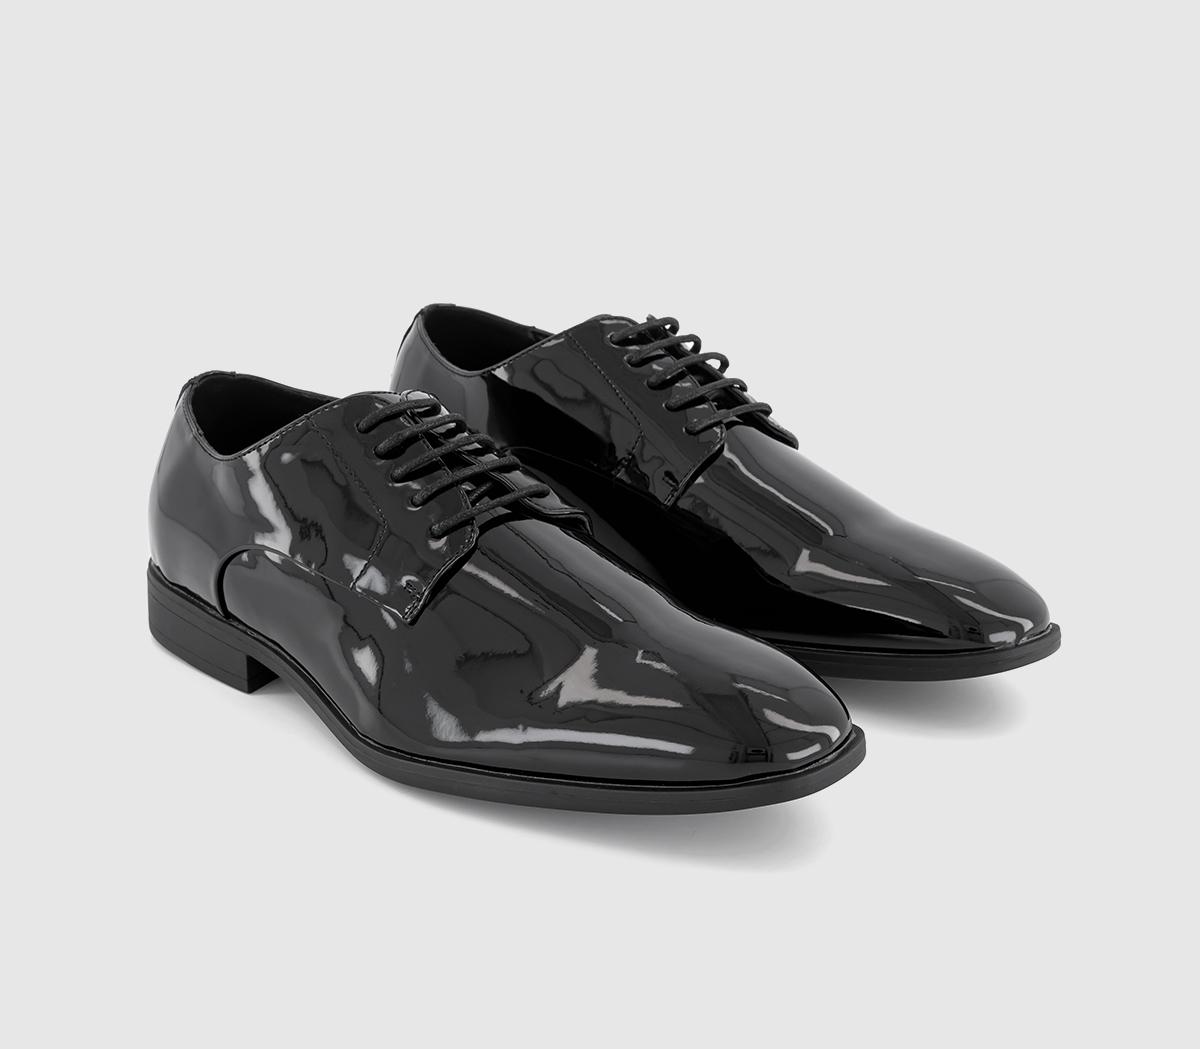 OFFICE Mens Moreland Patent Derby Shoes Black, 12